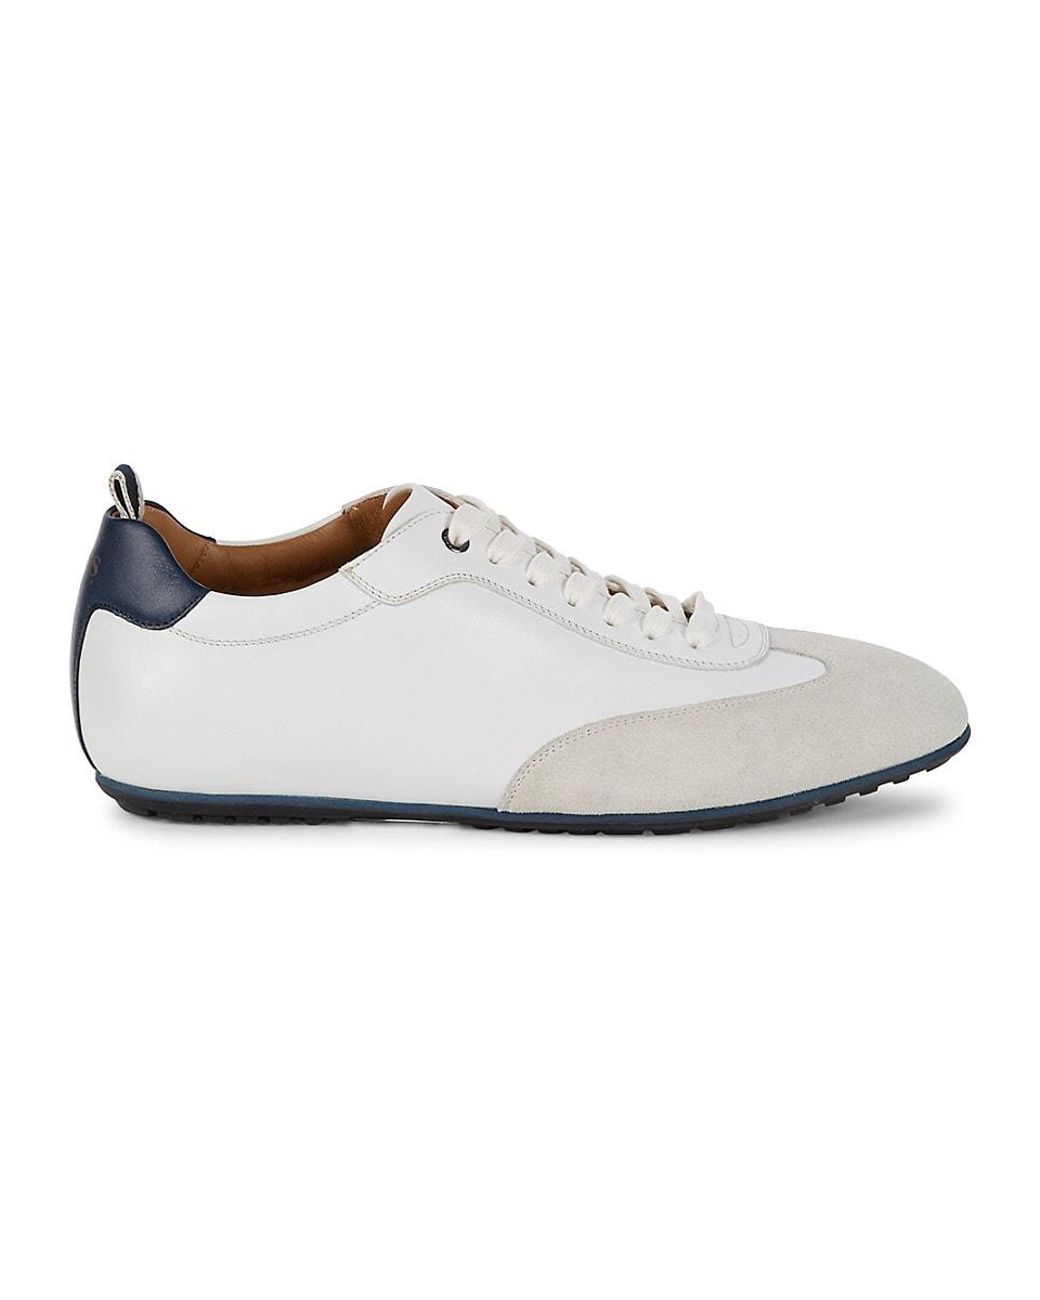 BOSS by HUGO BOSS Portobello Leather & Suede Sneakers in White for Men |  Lyst